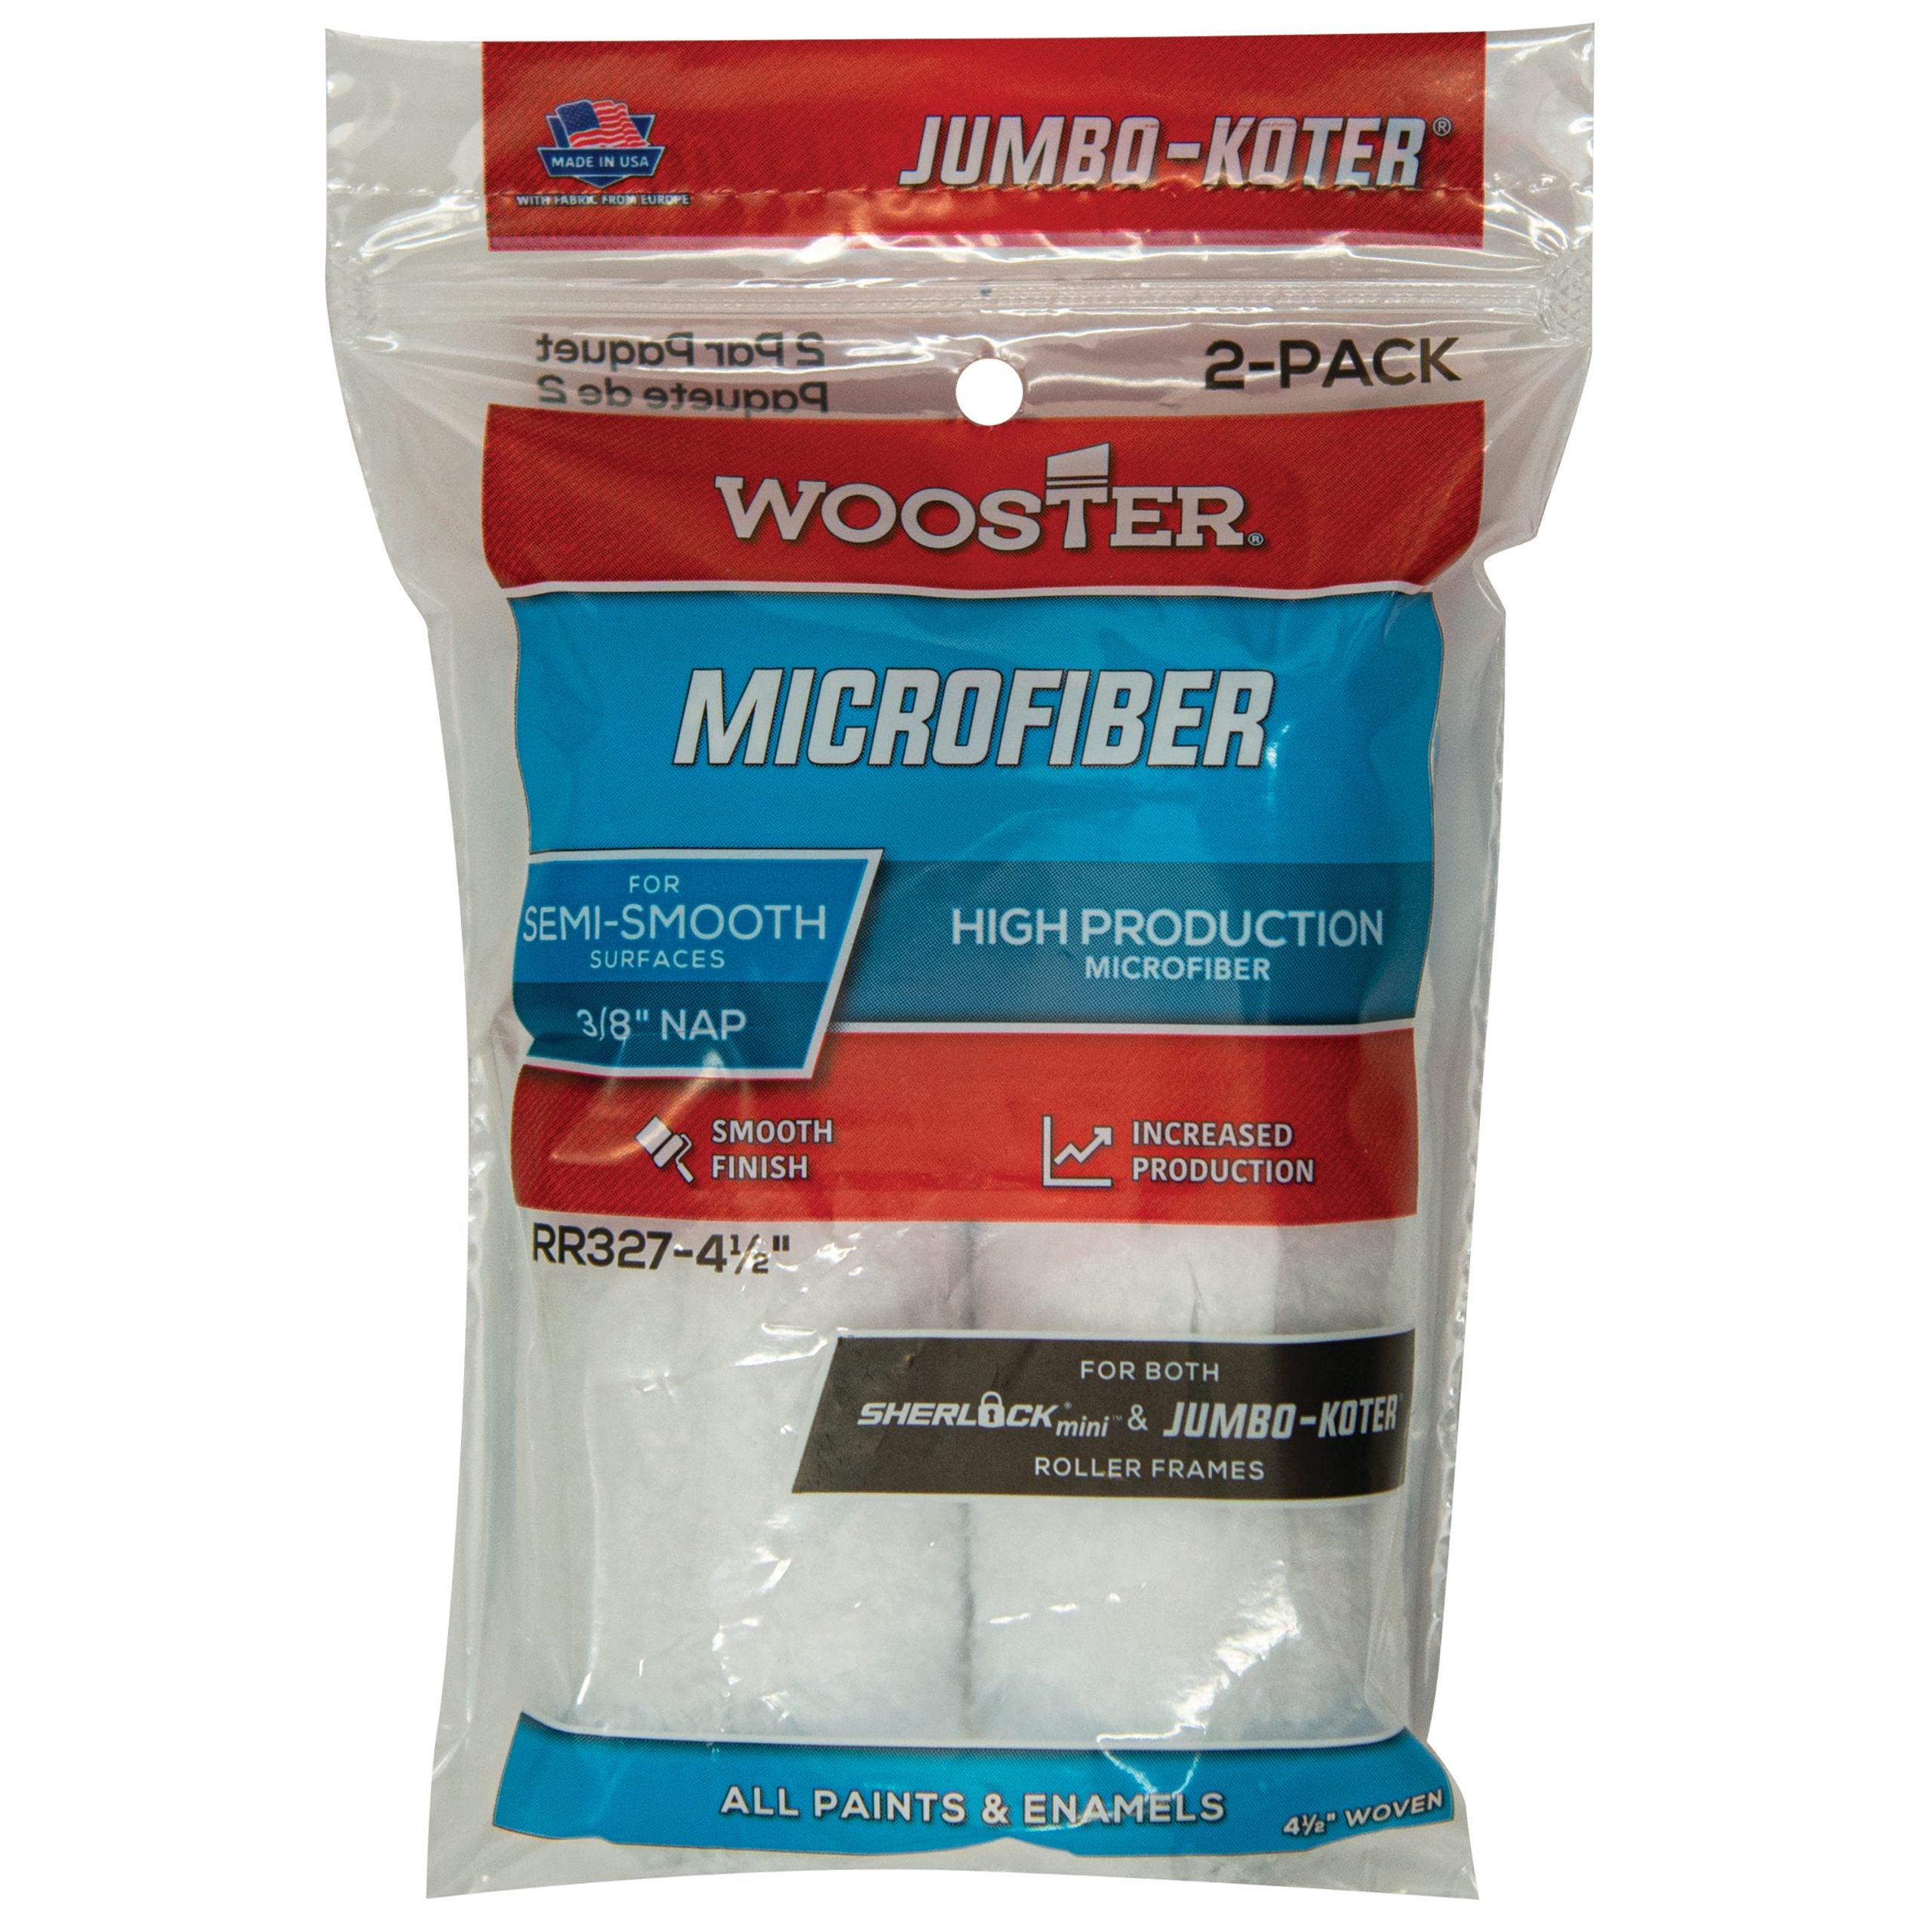 Wooster Microfiber Jumbo Koter Mini Paint Roller Sleeve (2 Pack)